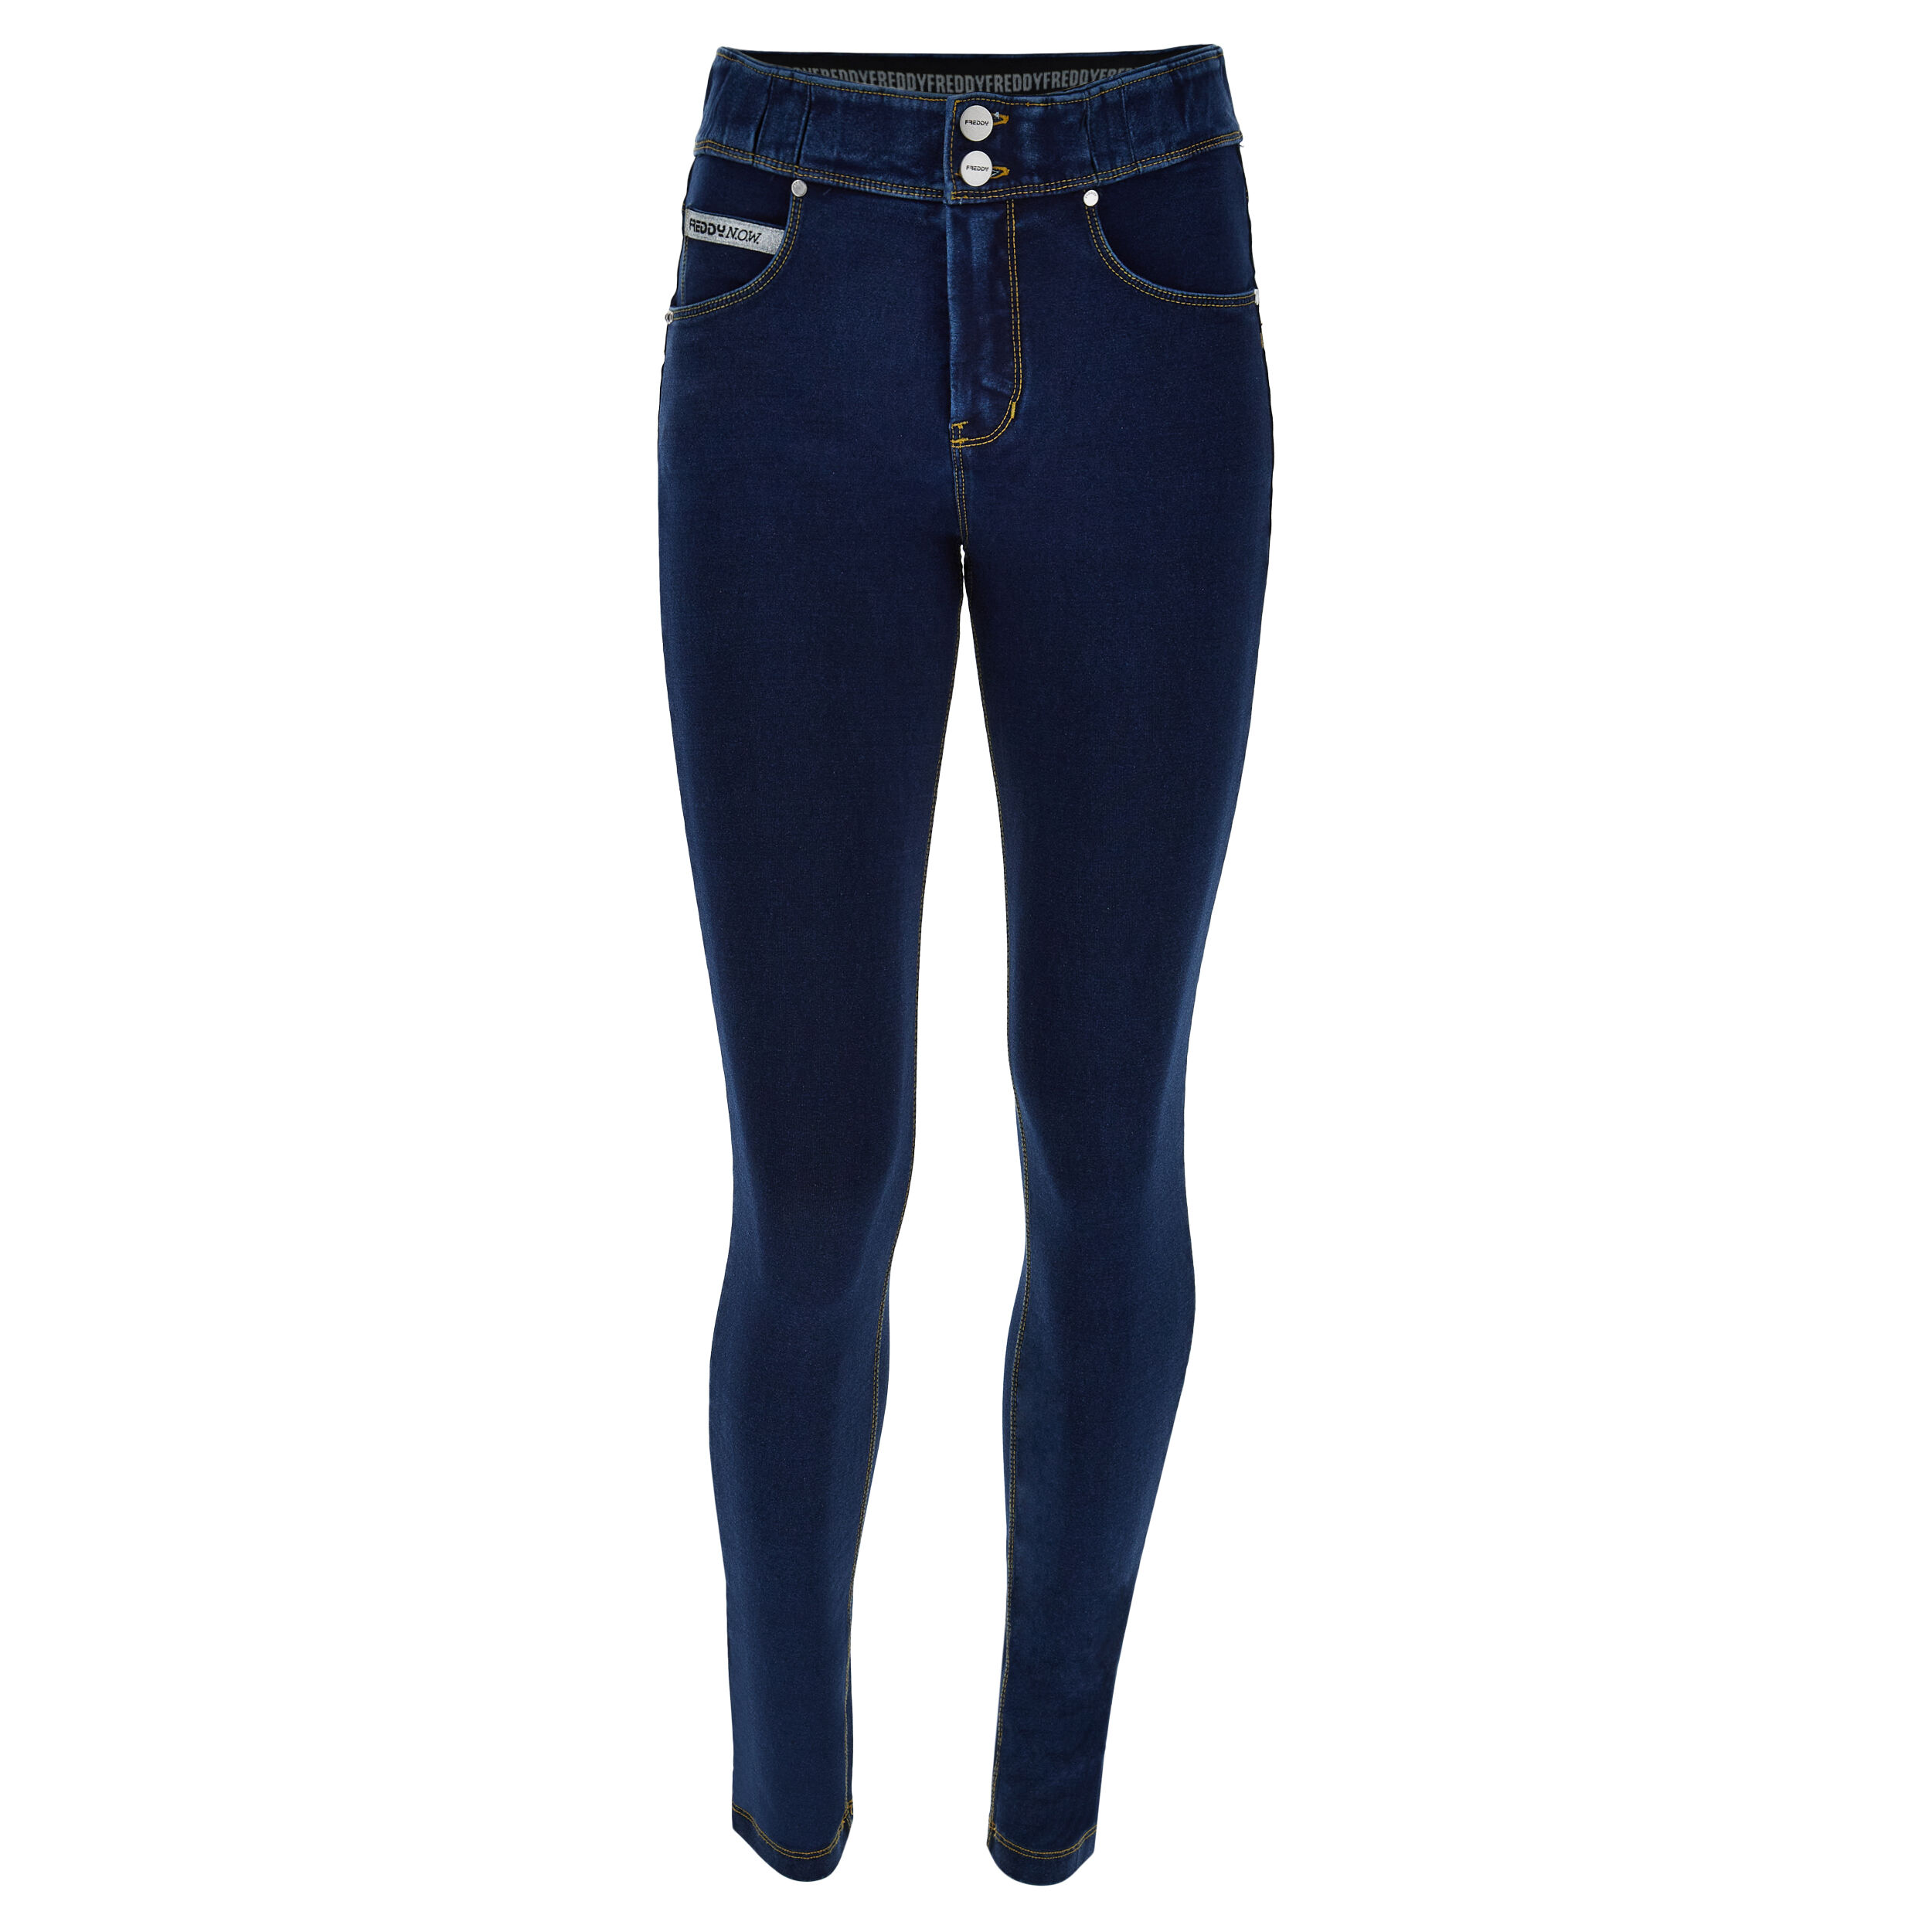 Freddy N.O.W.® Pants pantalone slim fit stile denim fondo stretto Jeans Scuro-Cuciture Gialle Donna Small